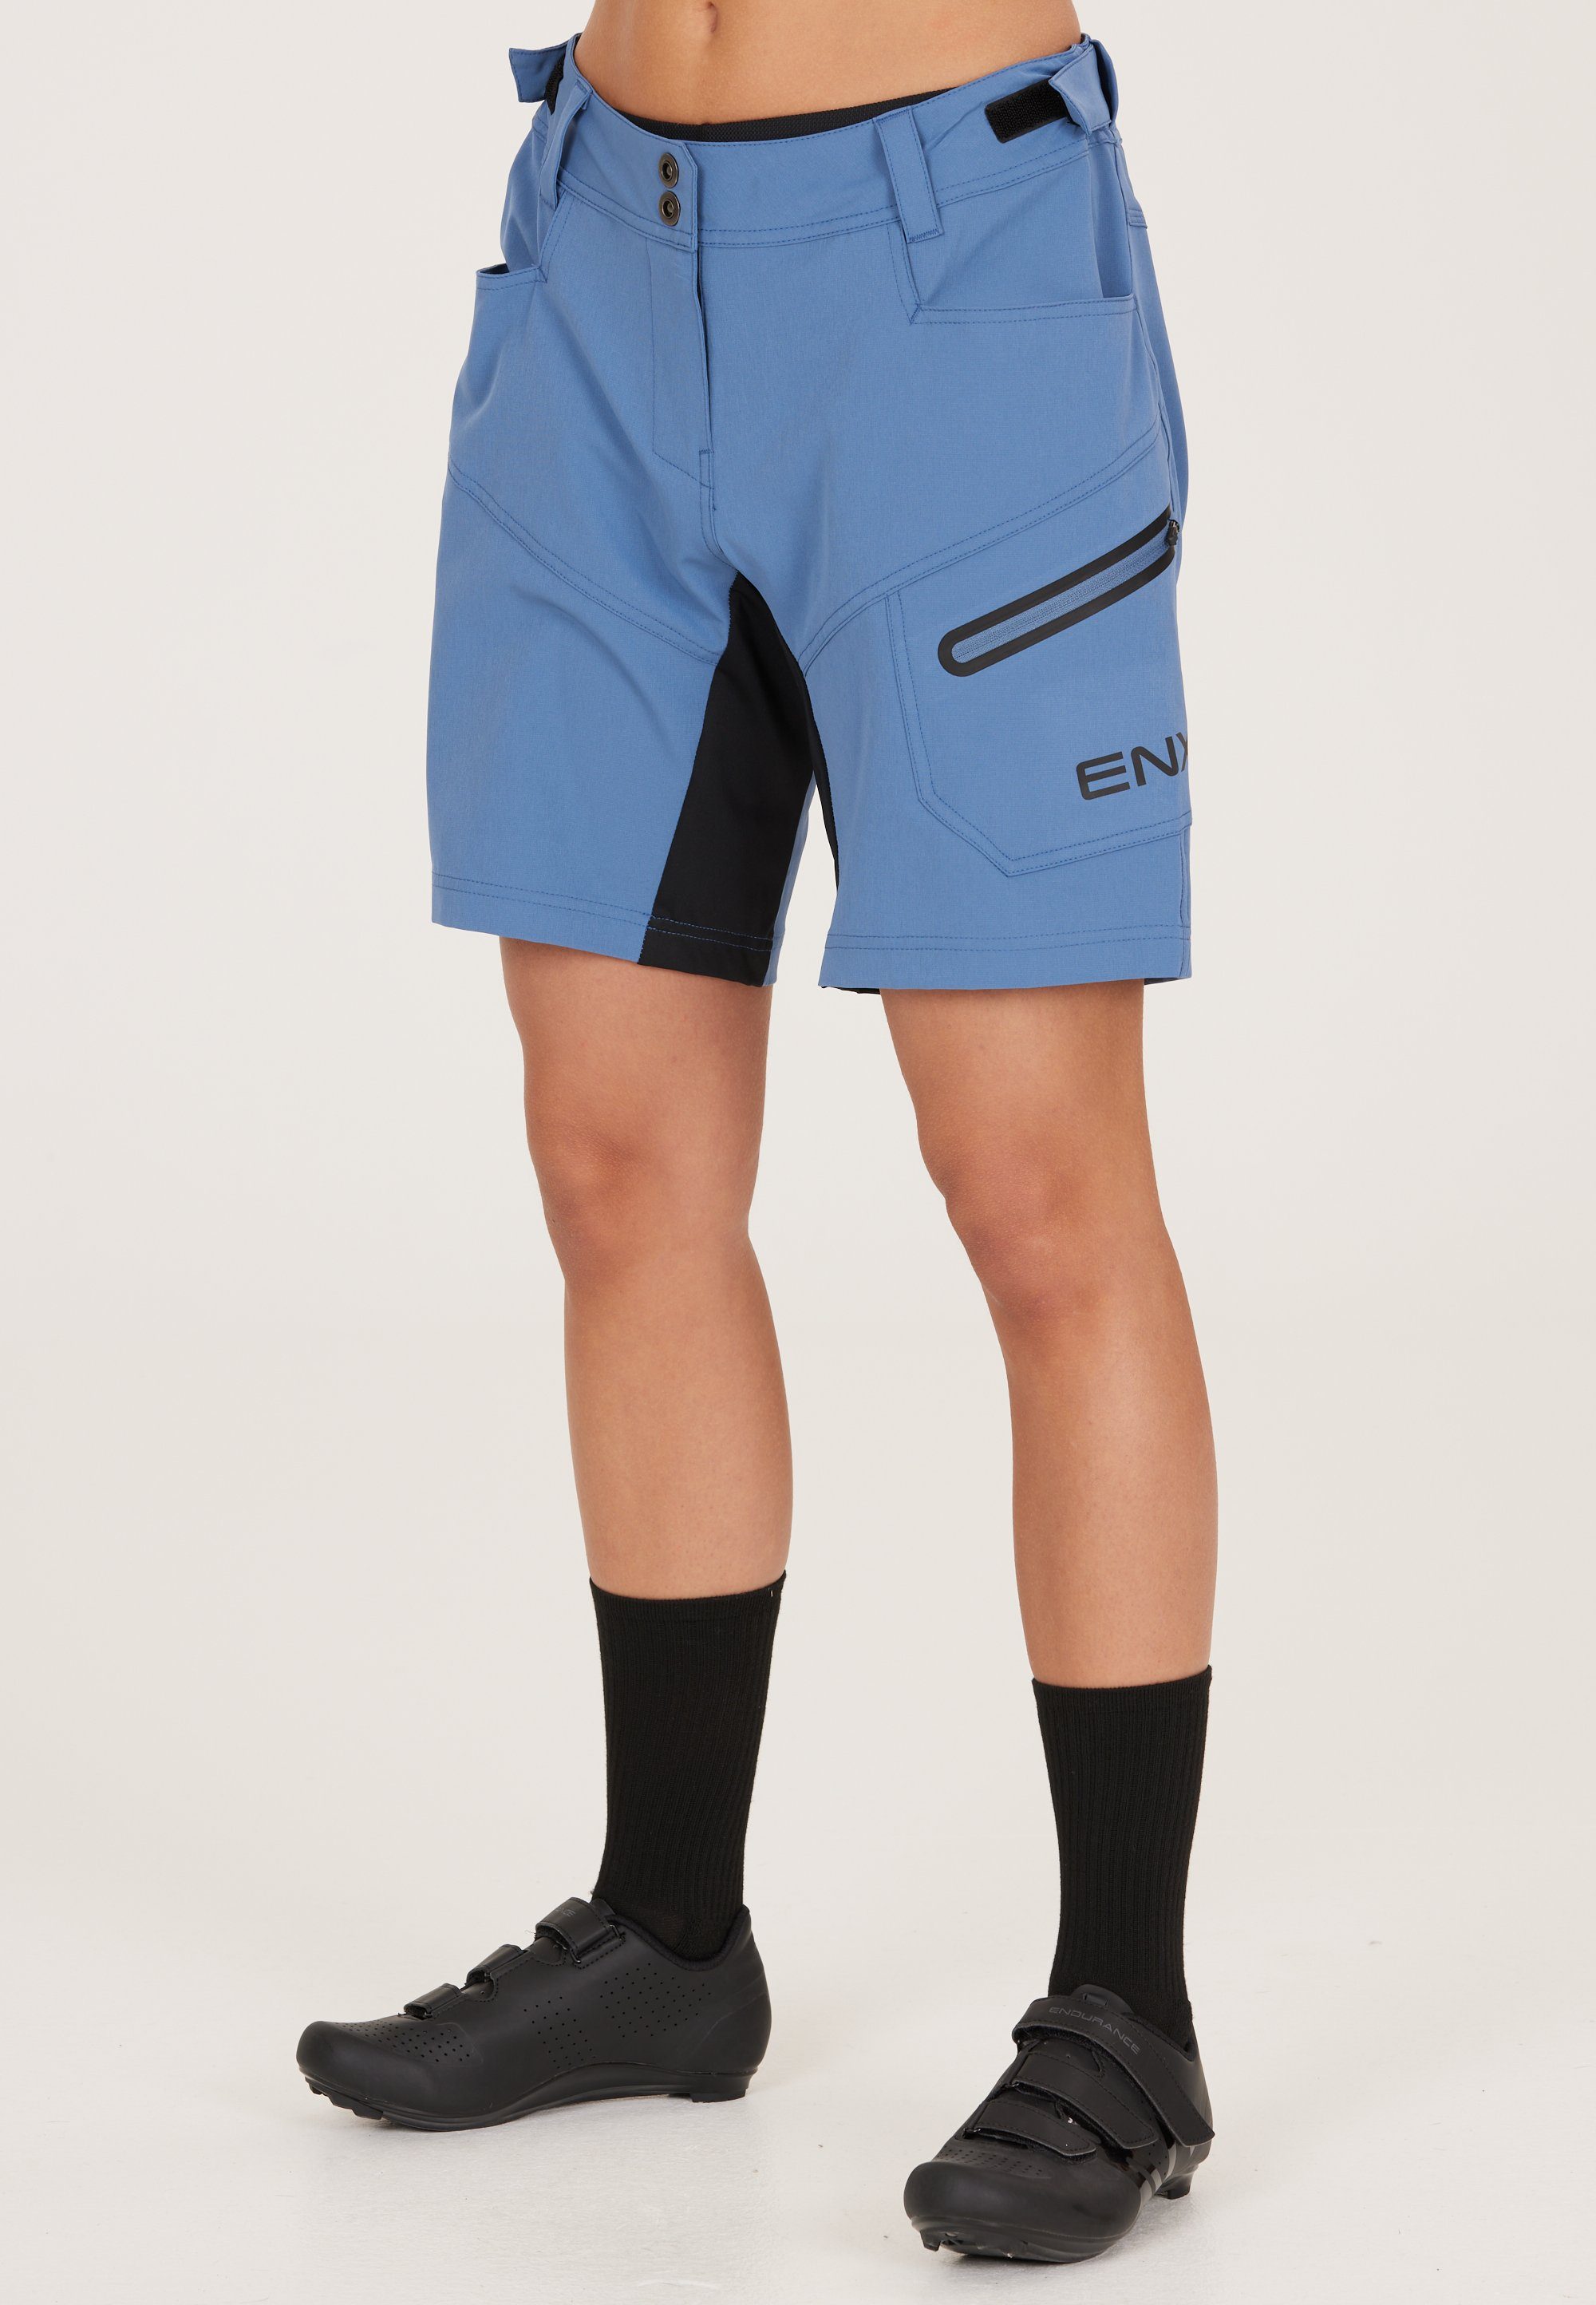 Shorts mit Innen-Tights ENDURANCE blau 2 W 1 herausnehmbarer in Radhose Jamilla